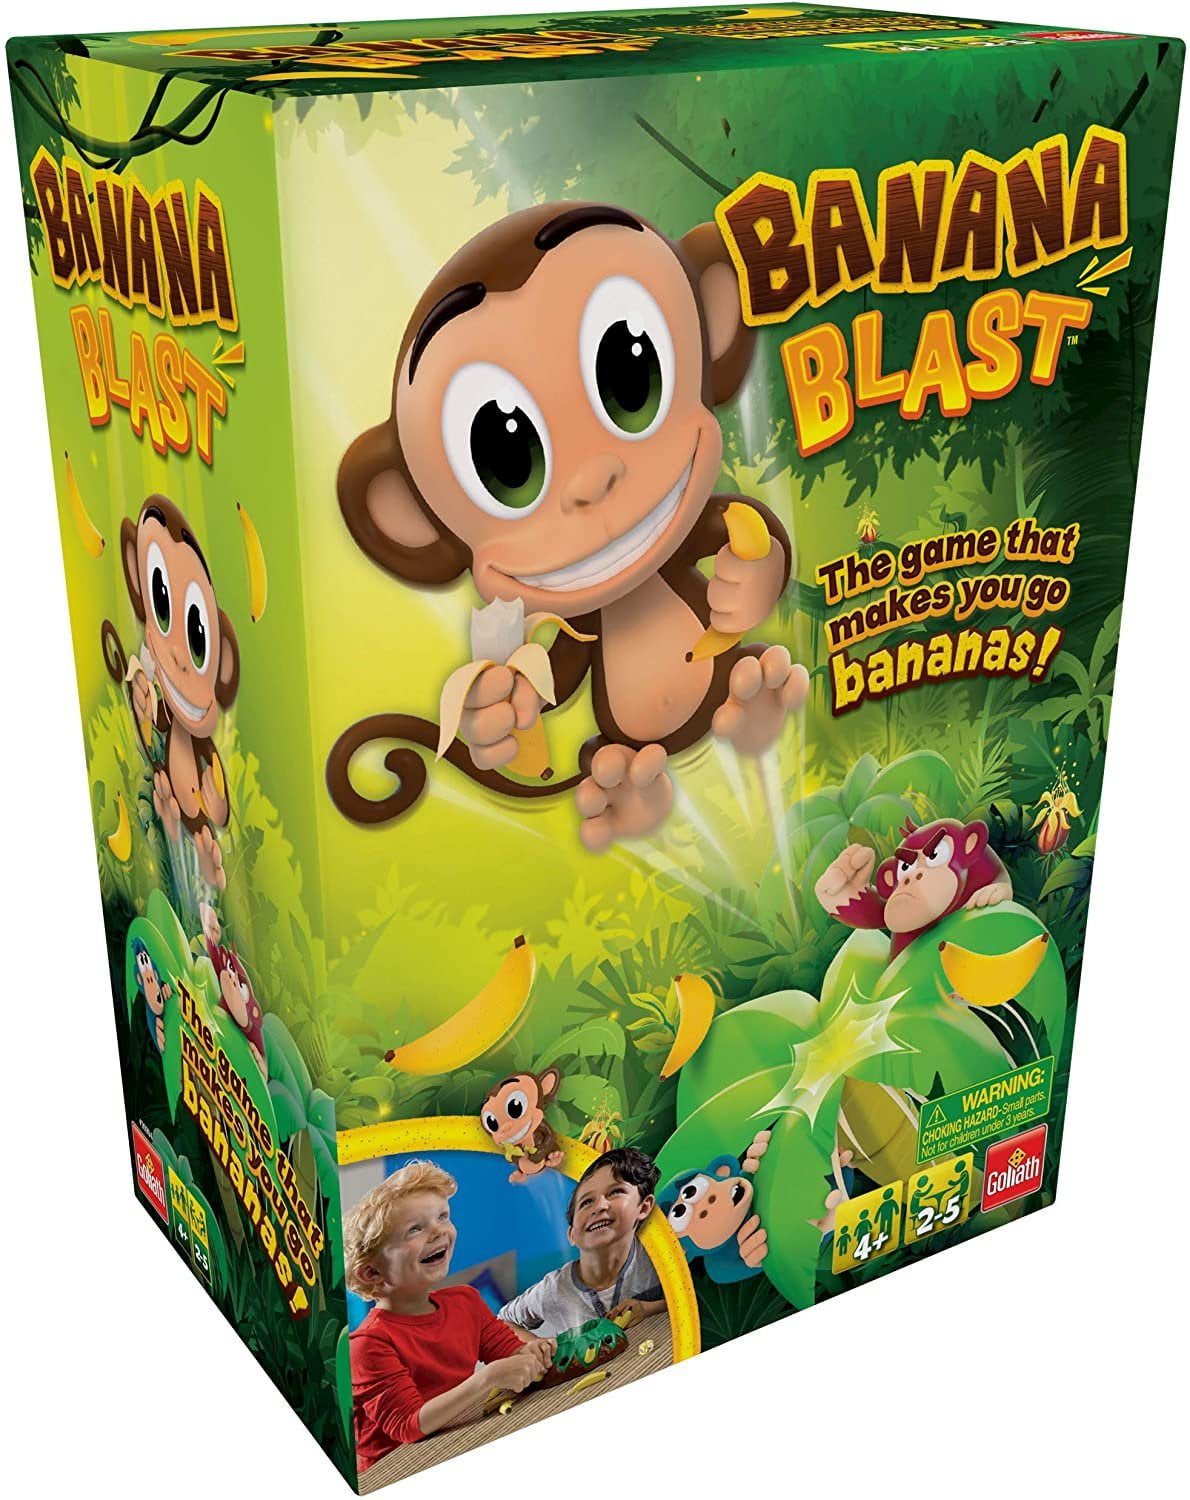 Banana Games: Play Banana Games on LittleGames for free